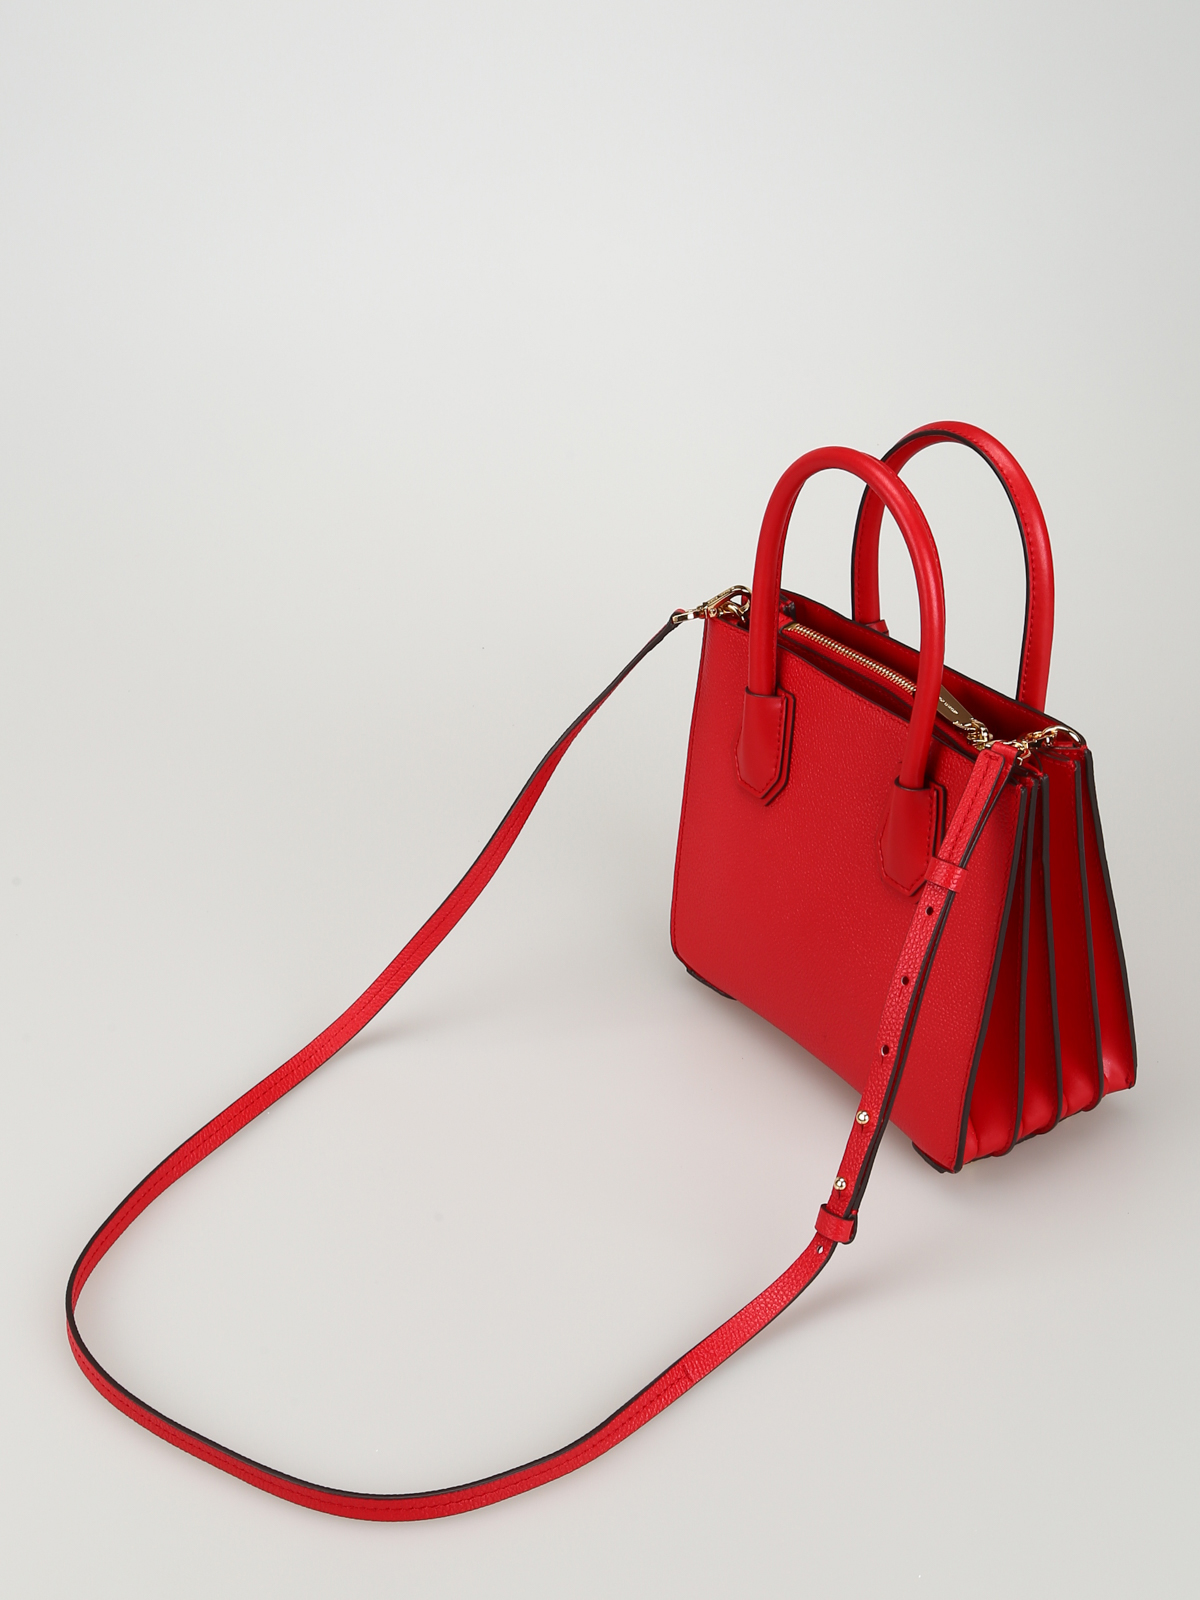 Michael Kors - Mercer M red leather bag 